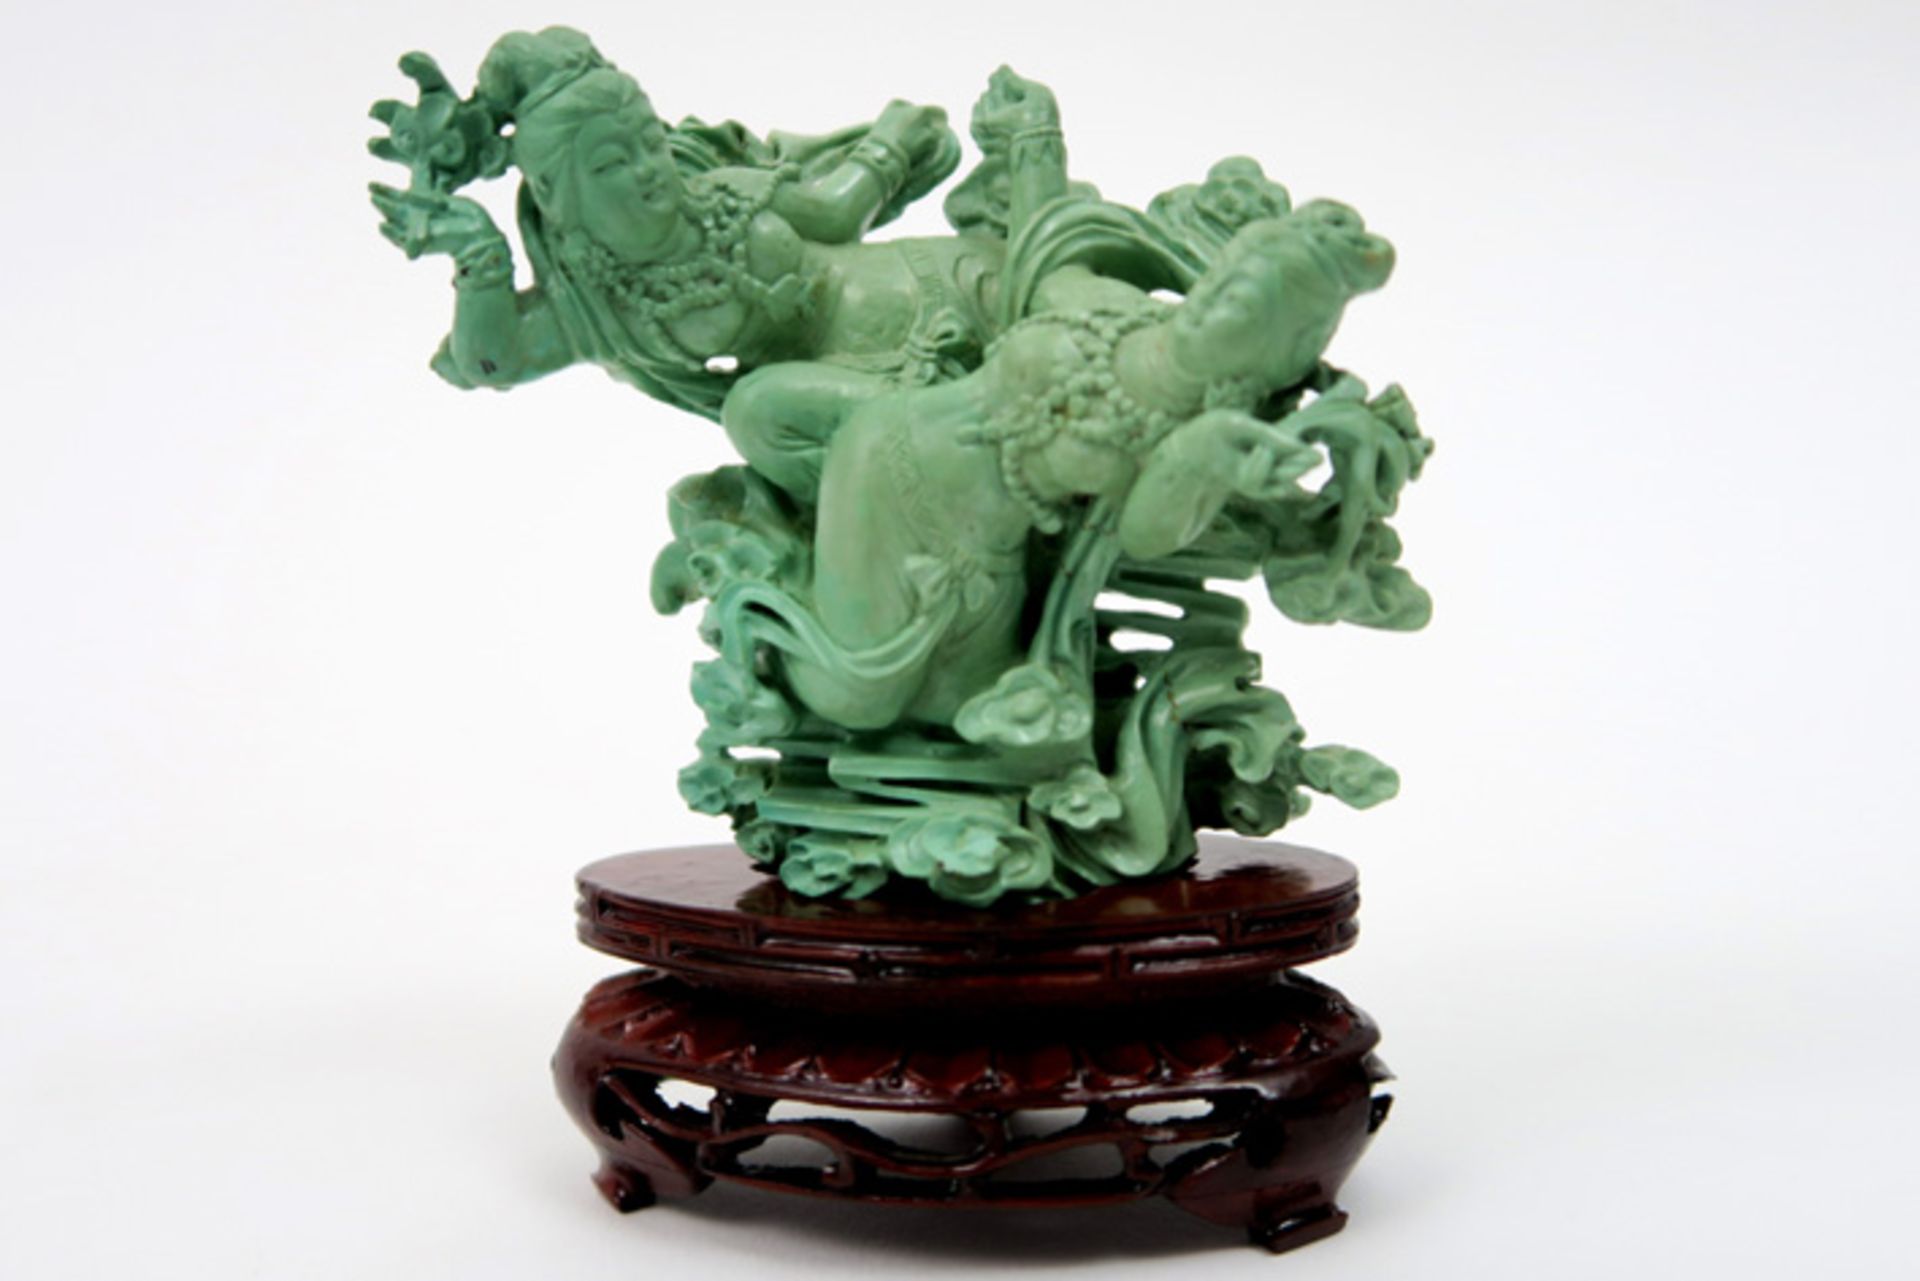 Chinese "two Heavenly ladies" sculpture in turquoise Chinese sculptuur in turkoois : "Twee hemelse